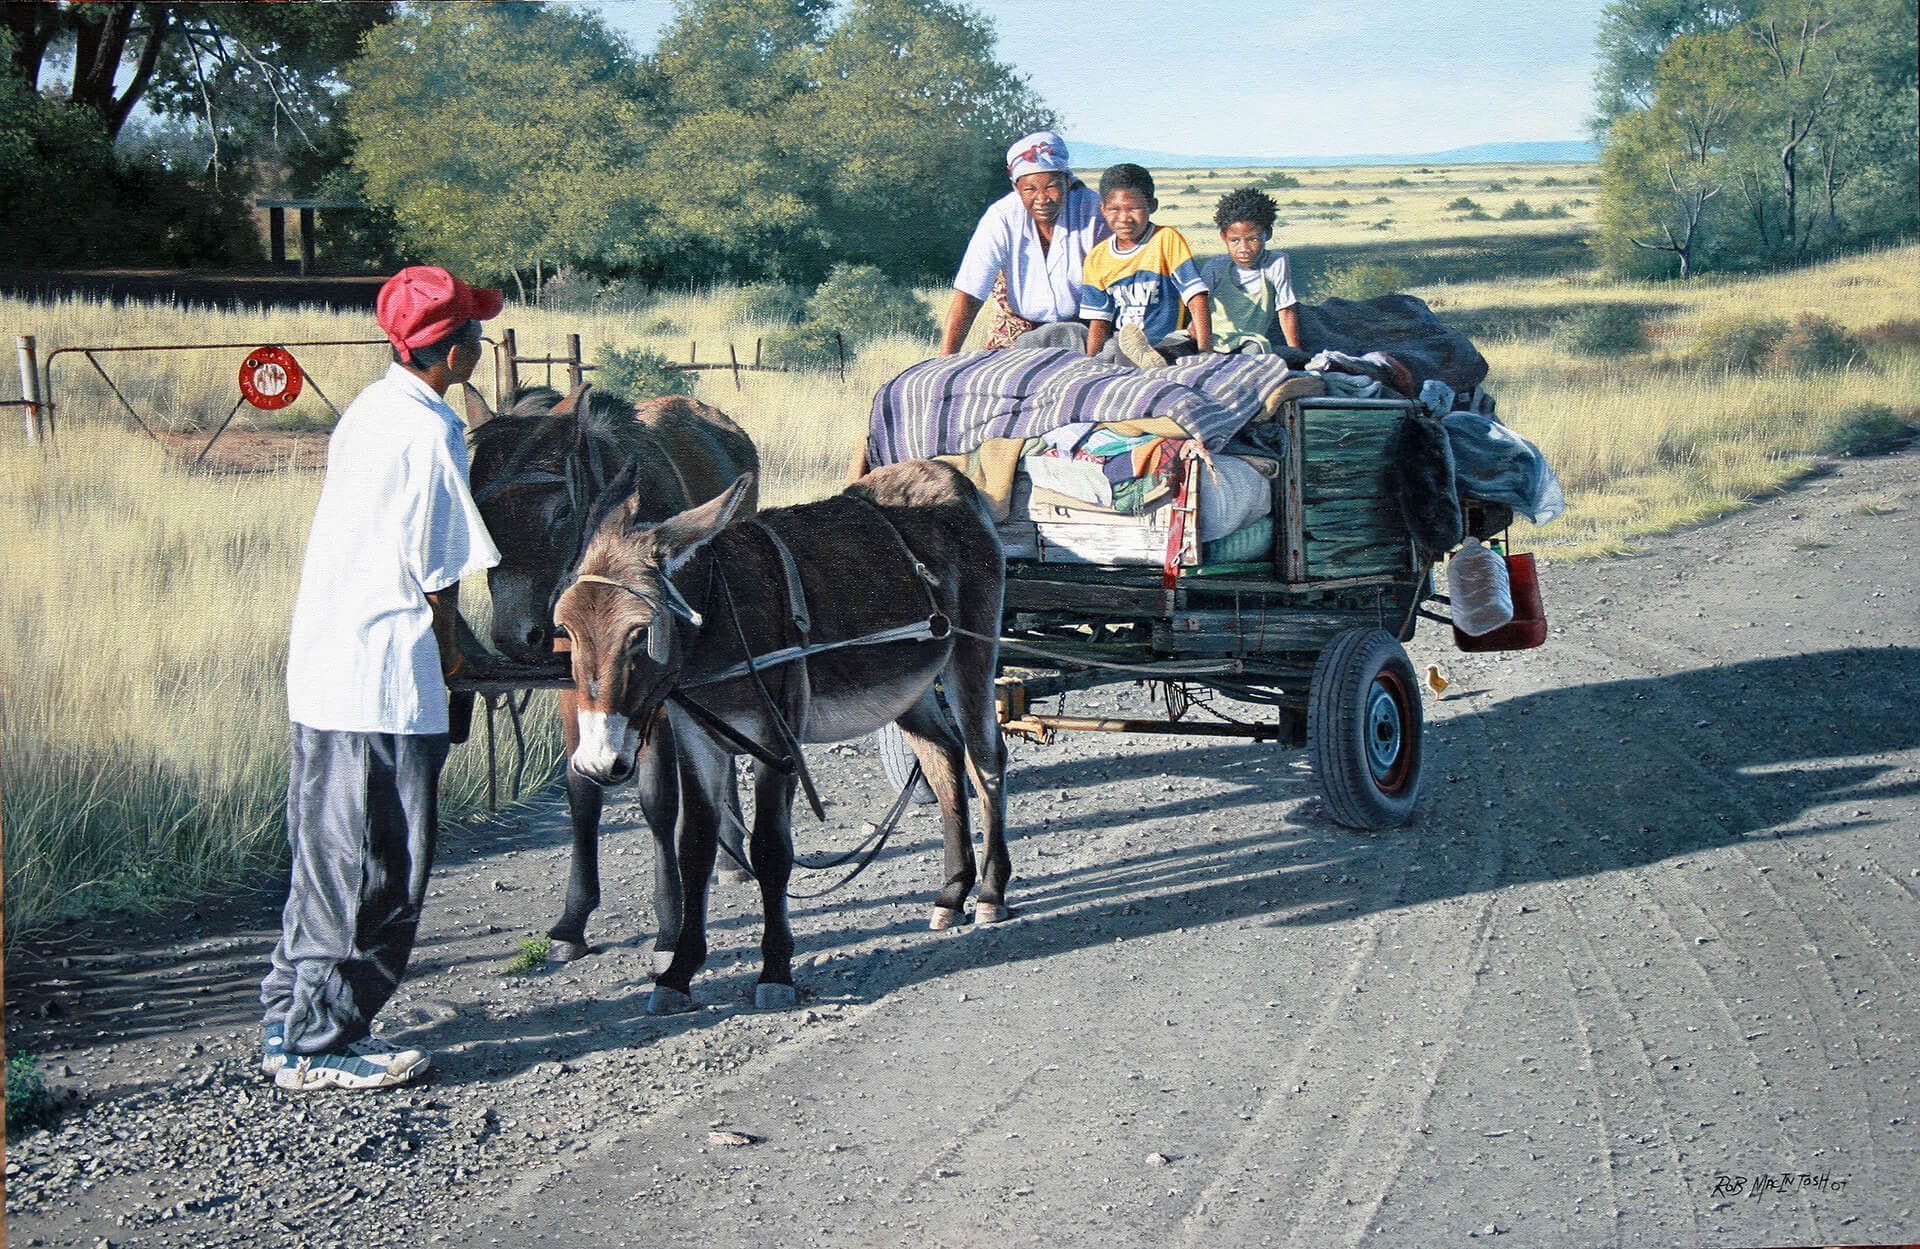 Photorealistic painting of donkey-pulled cart